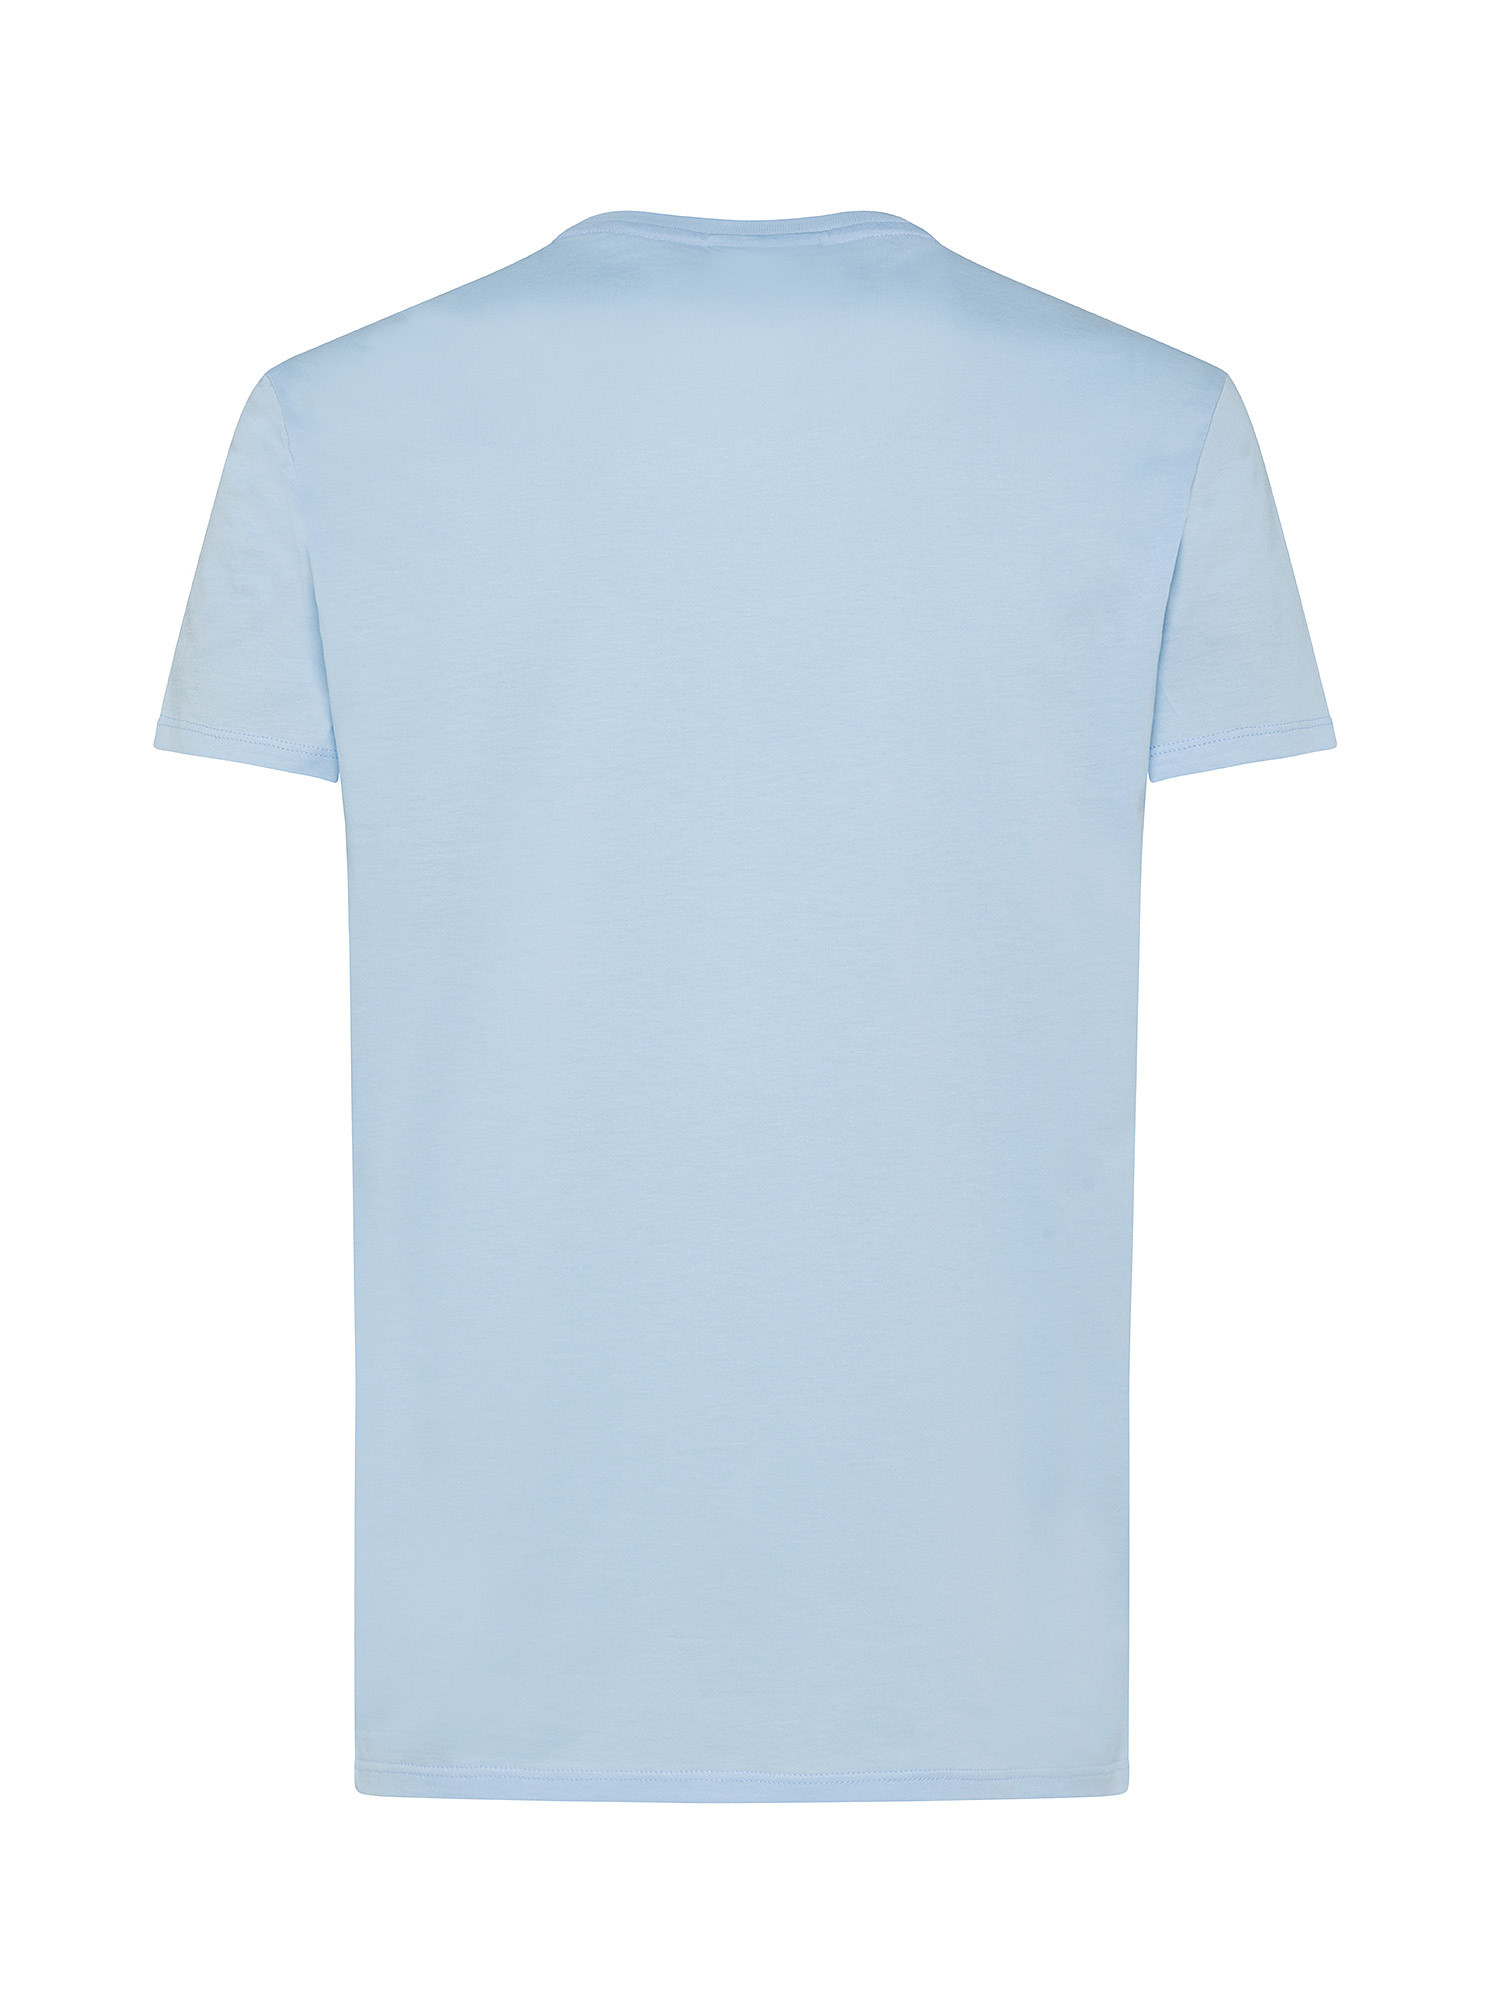 Lacoste - T-shirt girocollo in jersey di cotone Pima, Azzurro, large image number 1